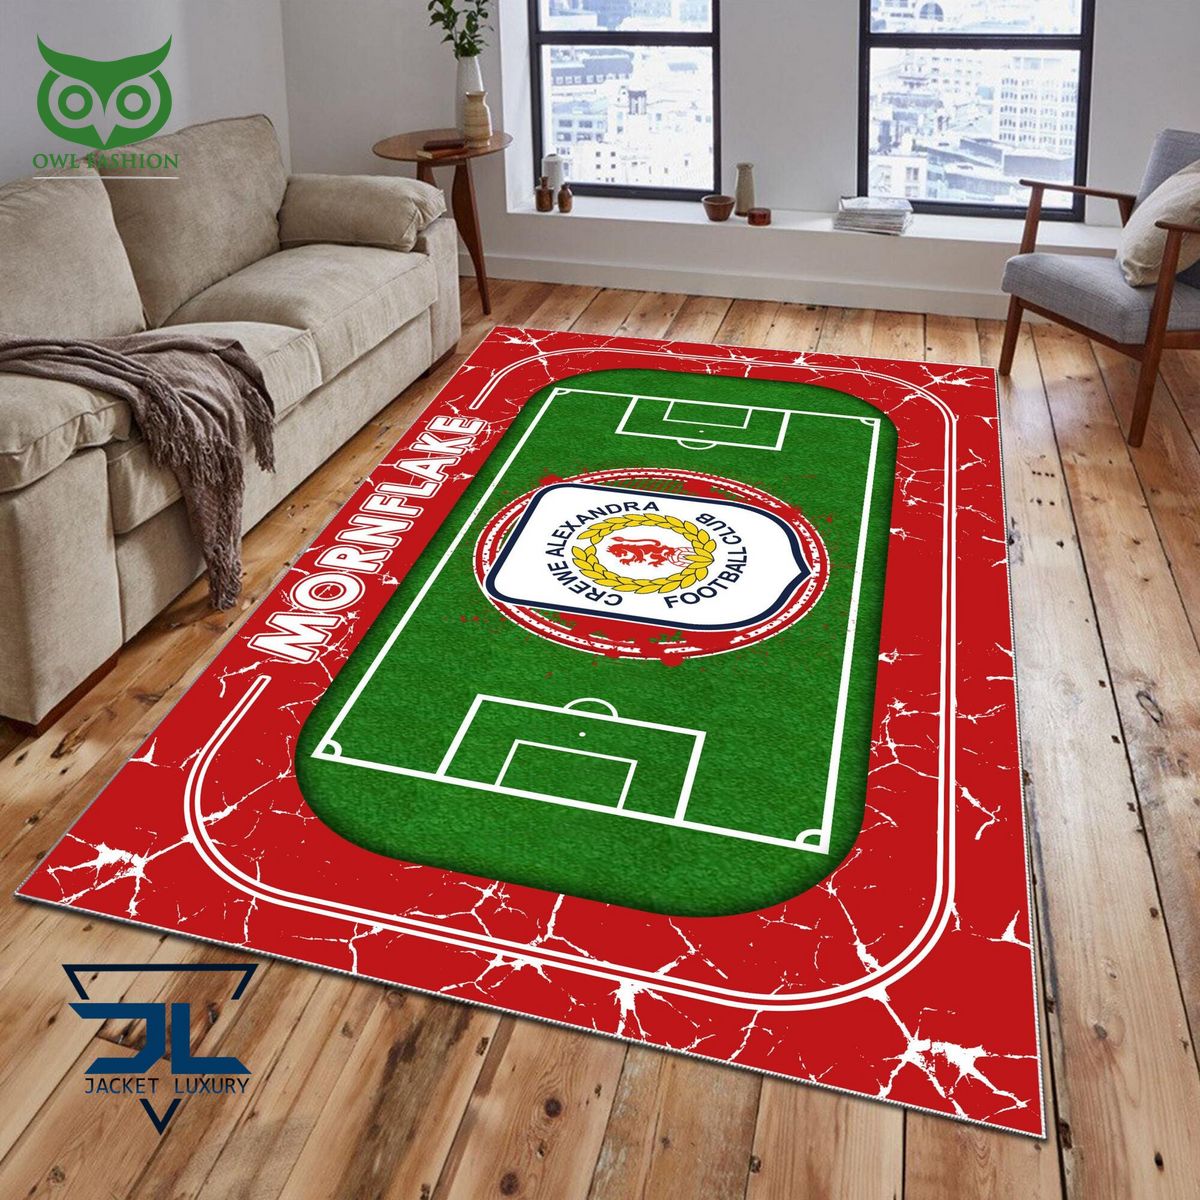 crewe alexandra english football league efl premium carpet rug 1 amA2X